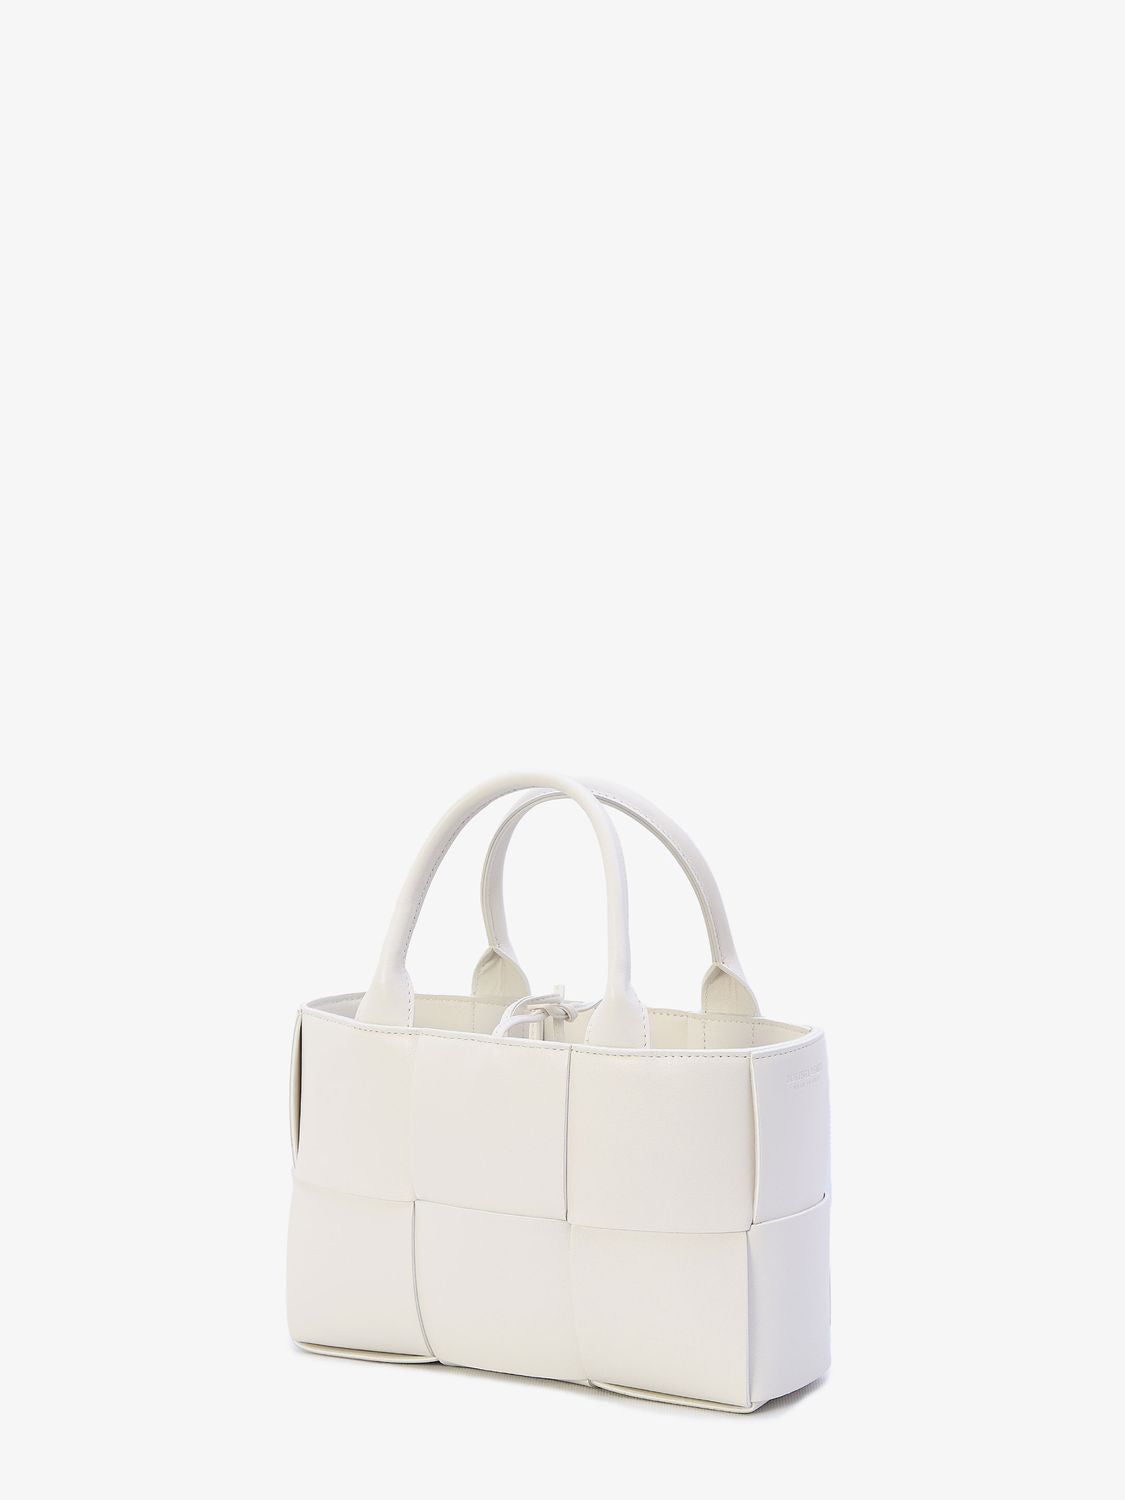 White Intreccio Pattern Handbag with Fixed Handles and Detachable Strap